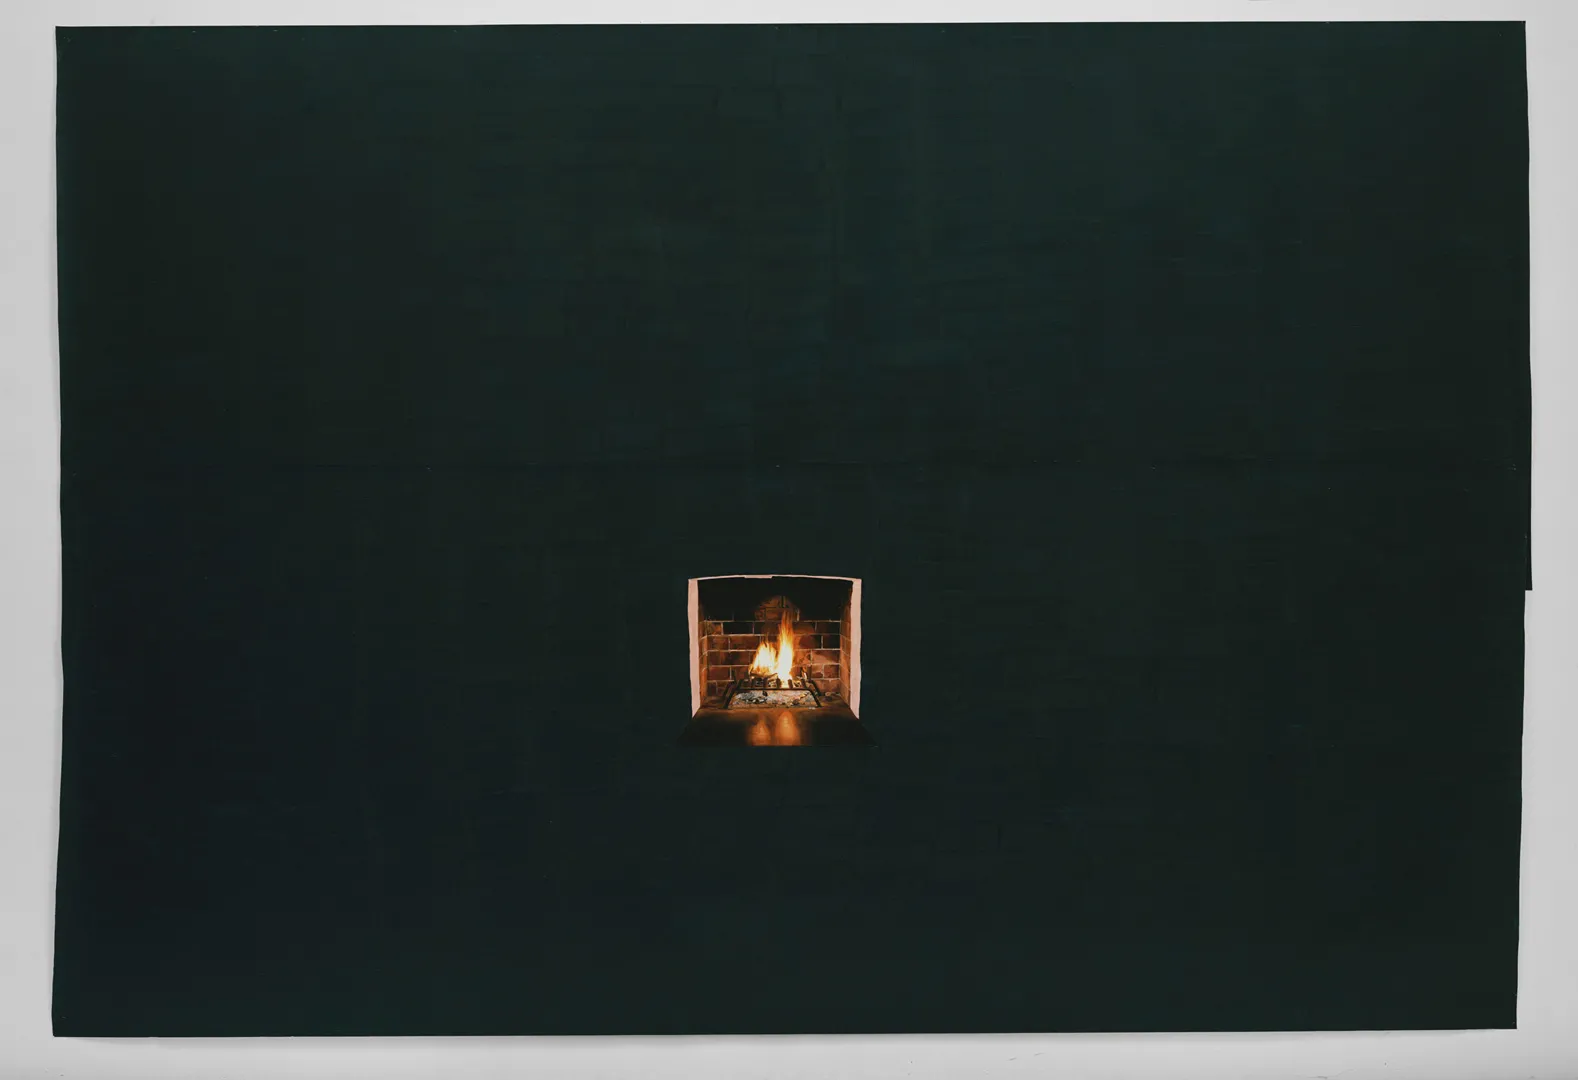 Toba Khedoori - Untitled (Black fireplace), 2006, encaustic, wax, oil paint on paper